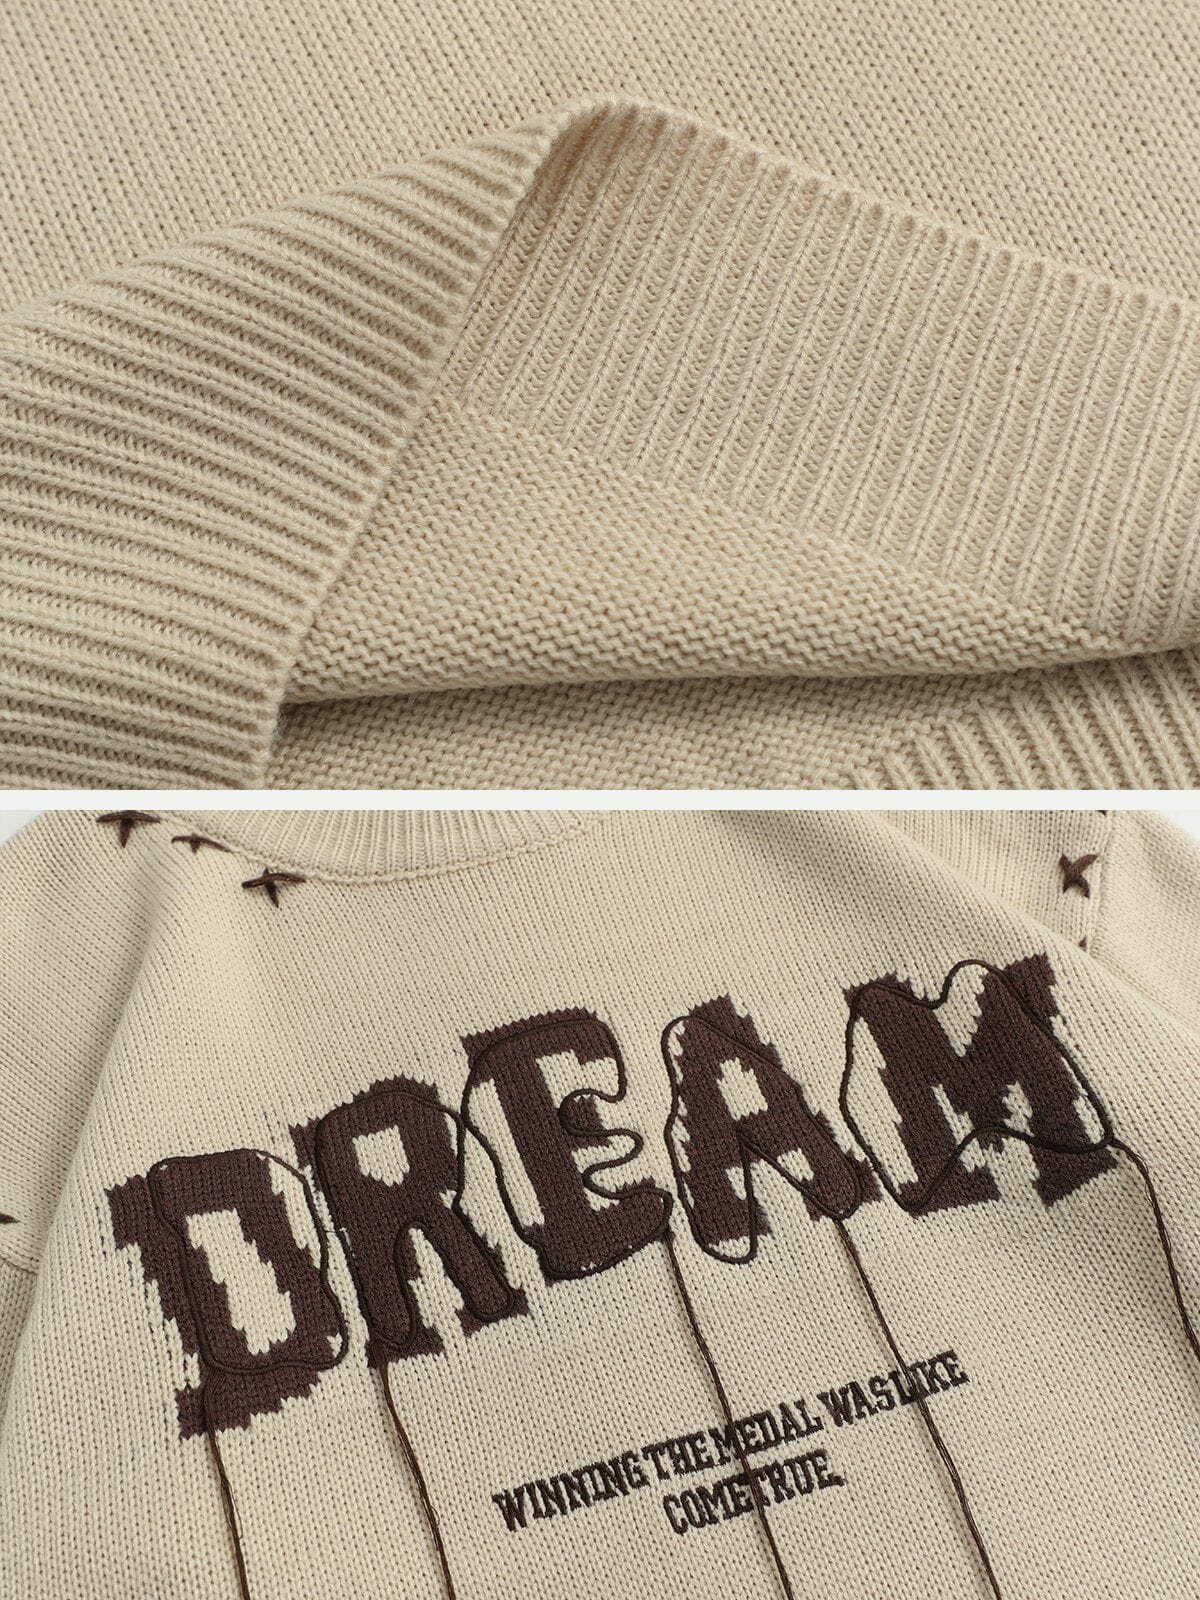 vintage letter line sweater retro streetwear statement 1469